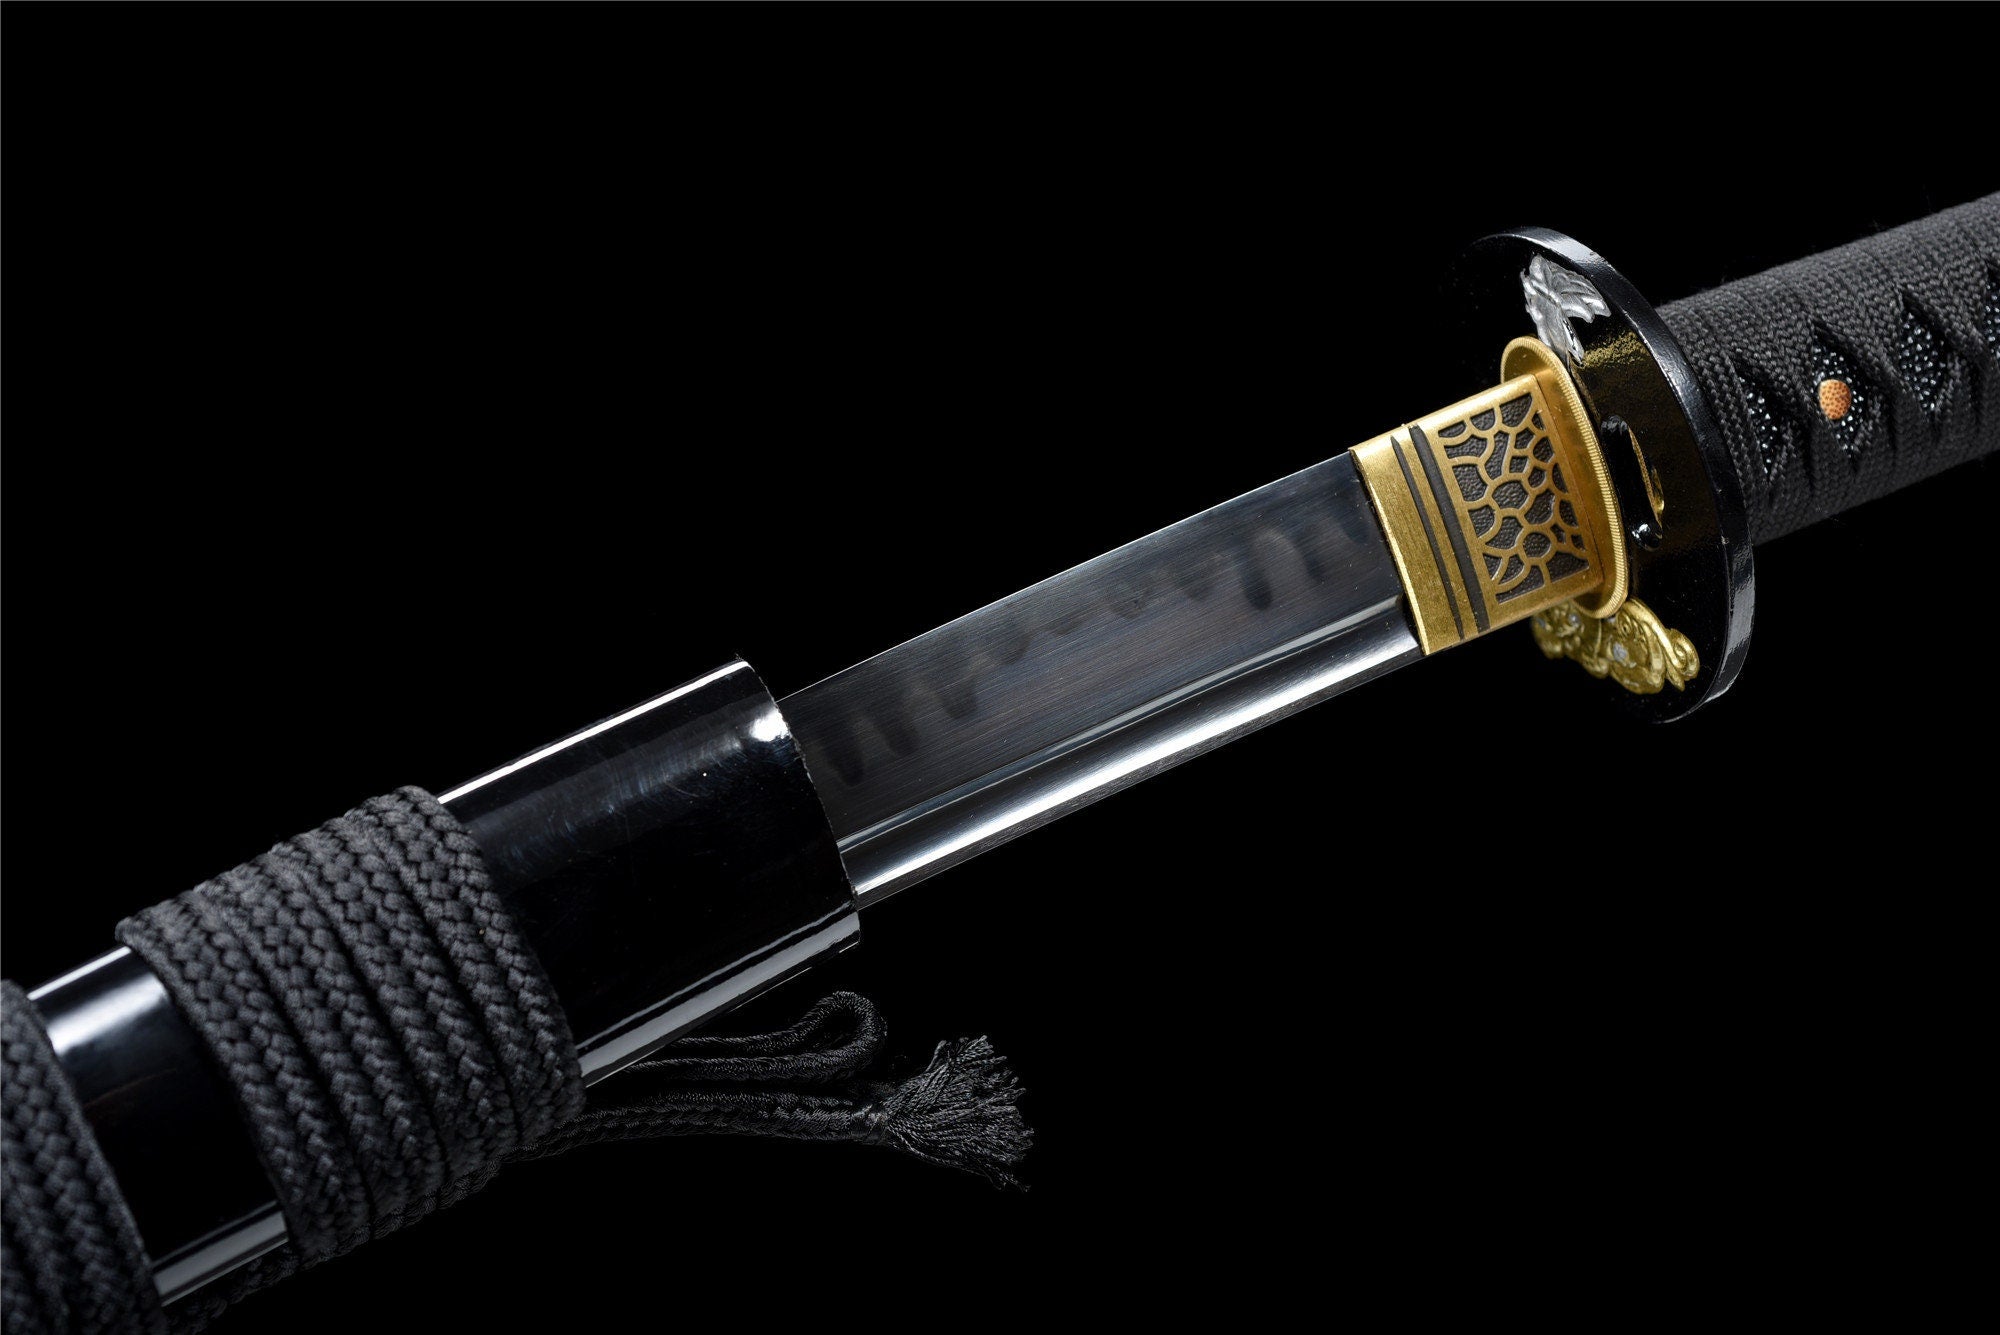 Blackwing Katana,Japanese Samurai Sword,Real Handmade Katana,T10 High Carbon Steel Clay Tempered With Hamon